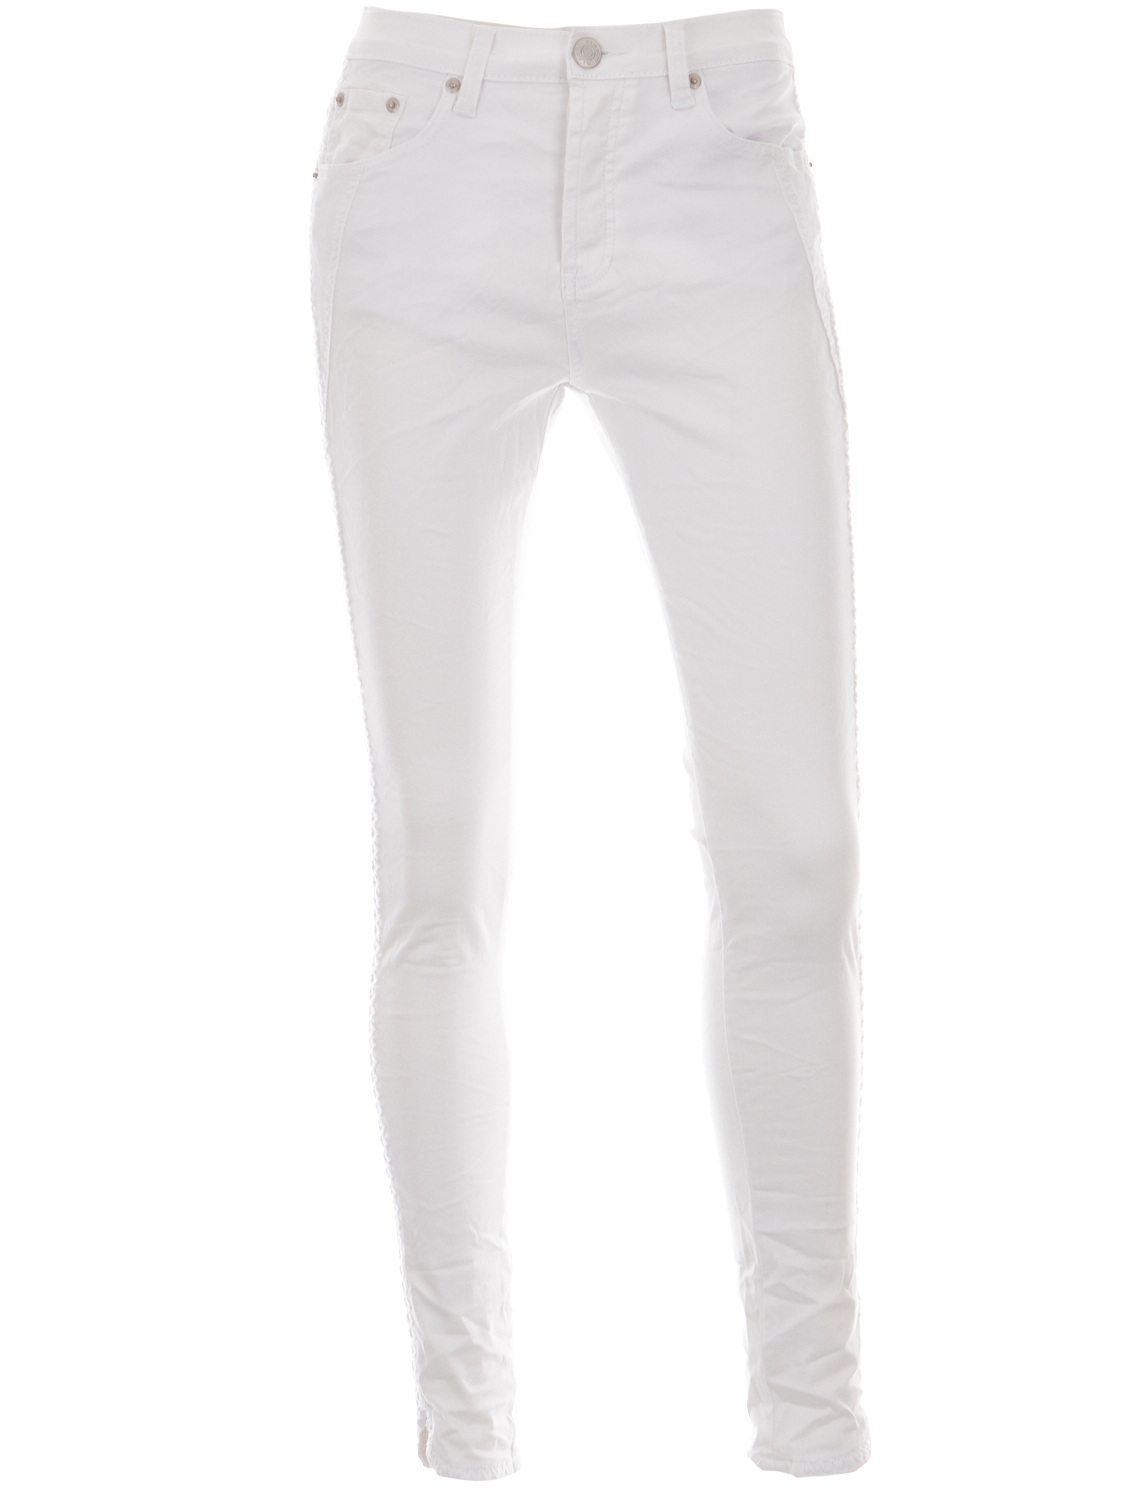 Witte dames jeans met borduur detail zijkant Bianco - 1116330bl emmerson